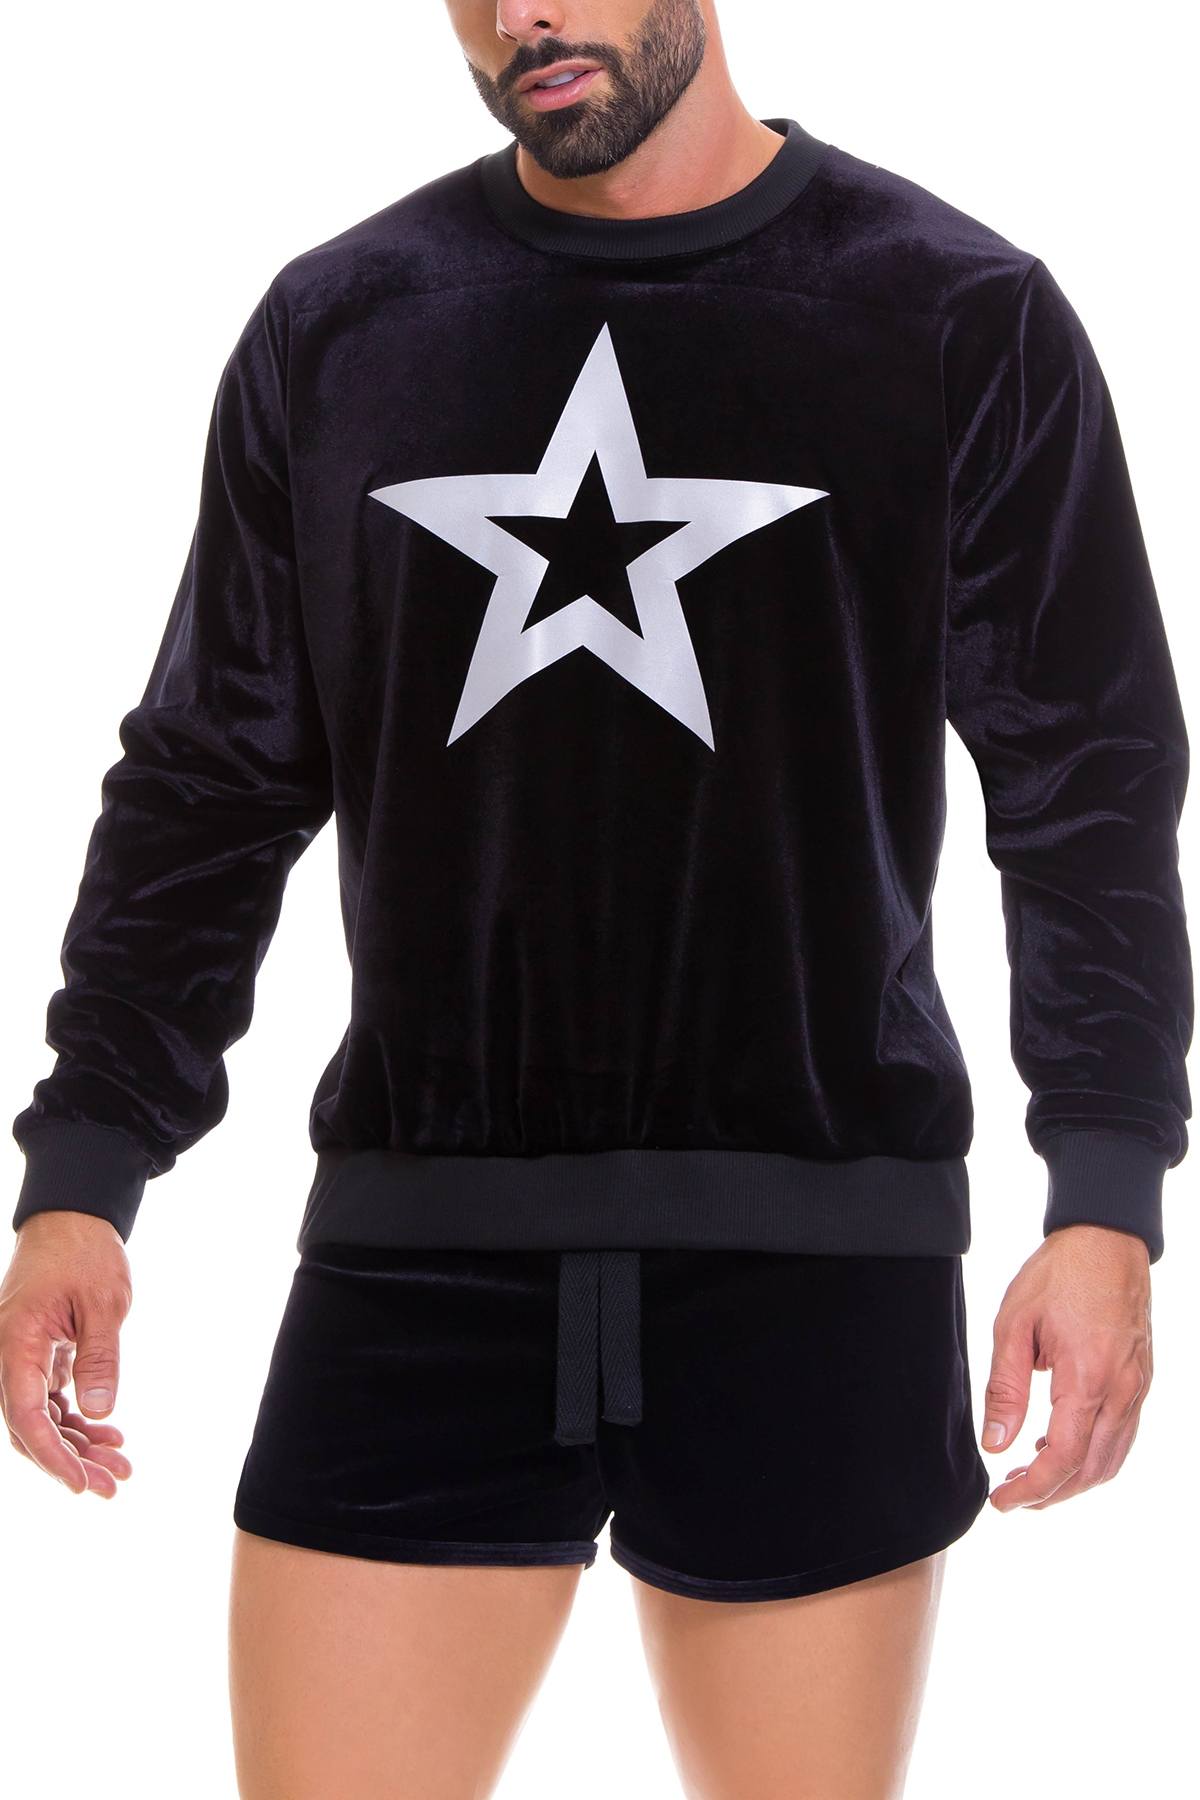 Jor Black Star Sweater